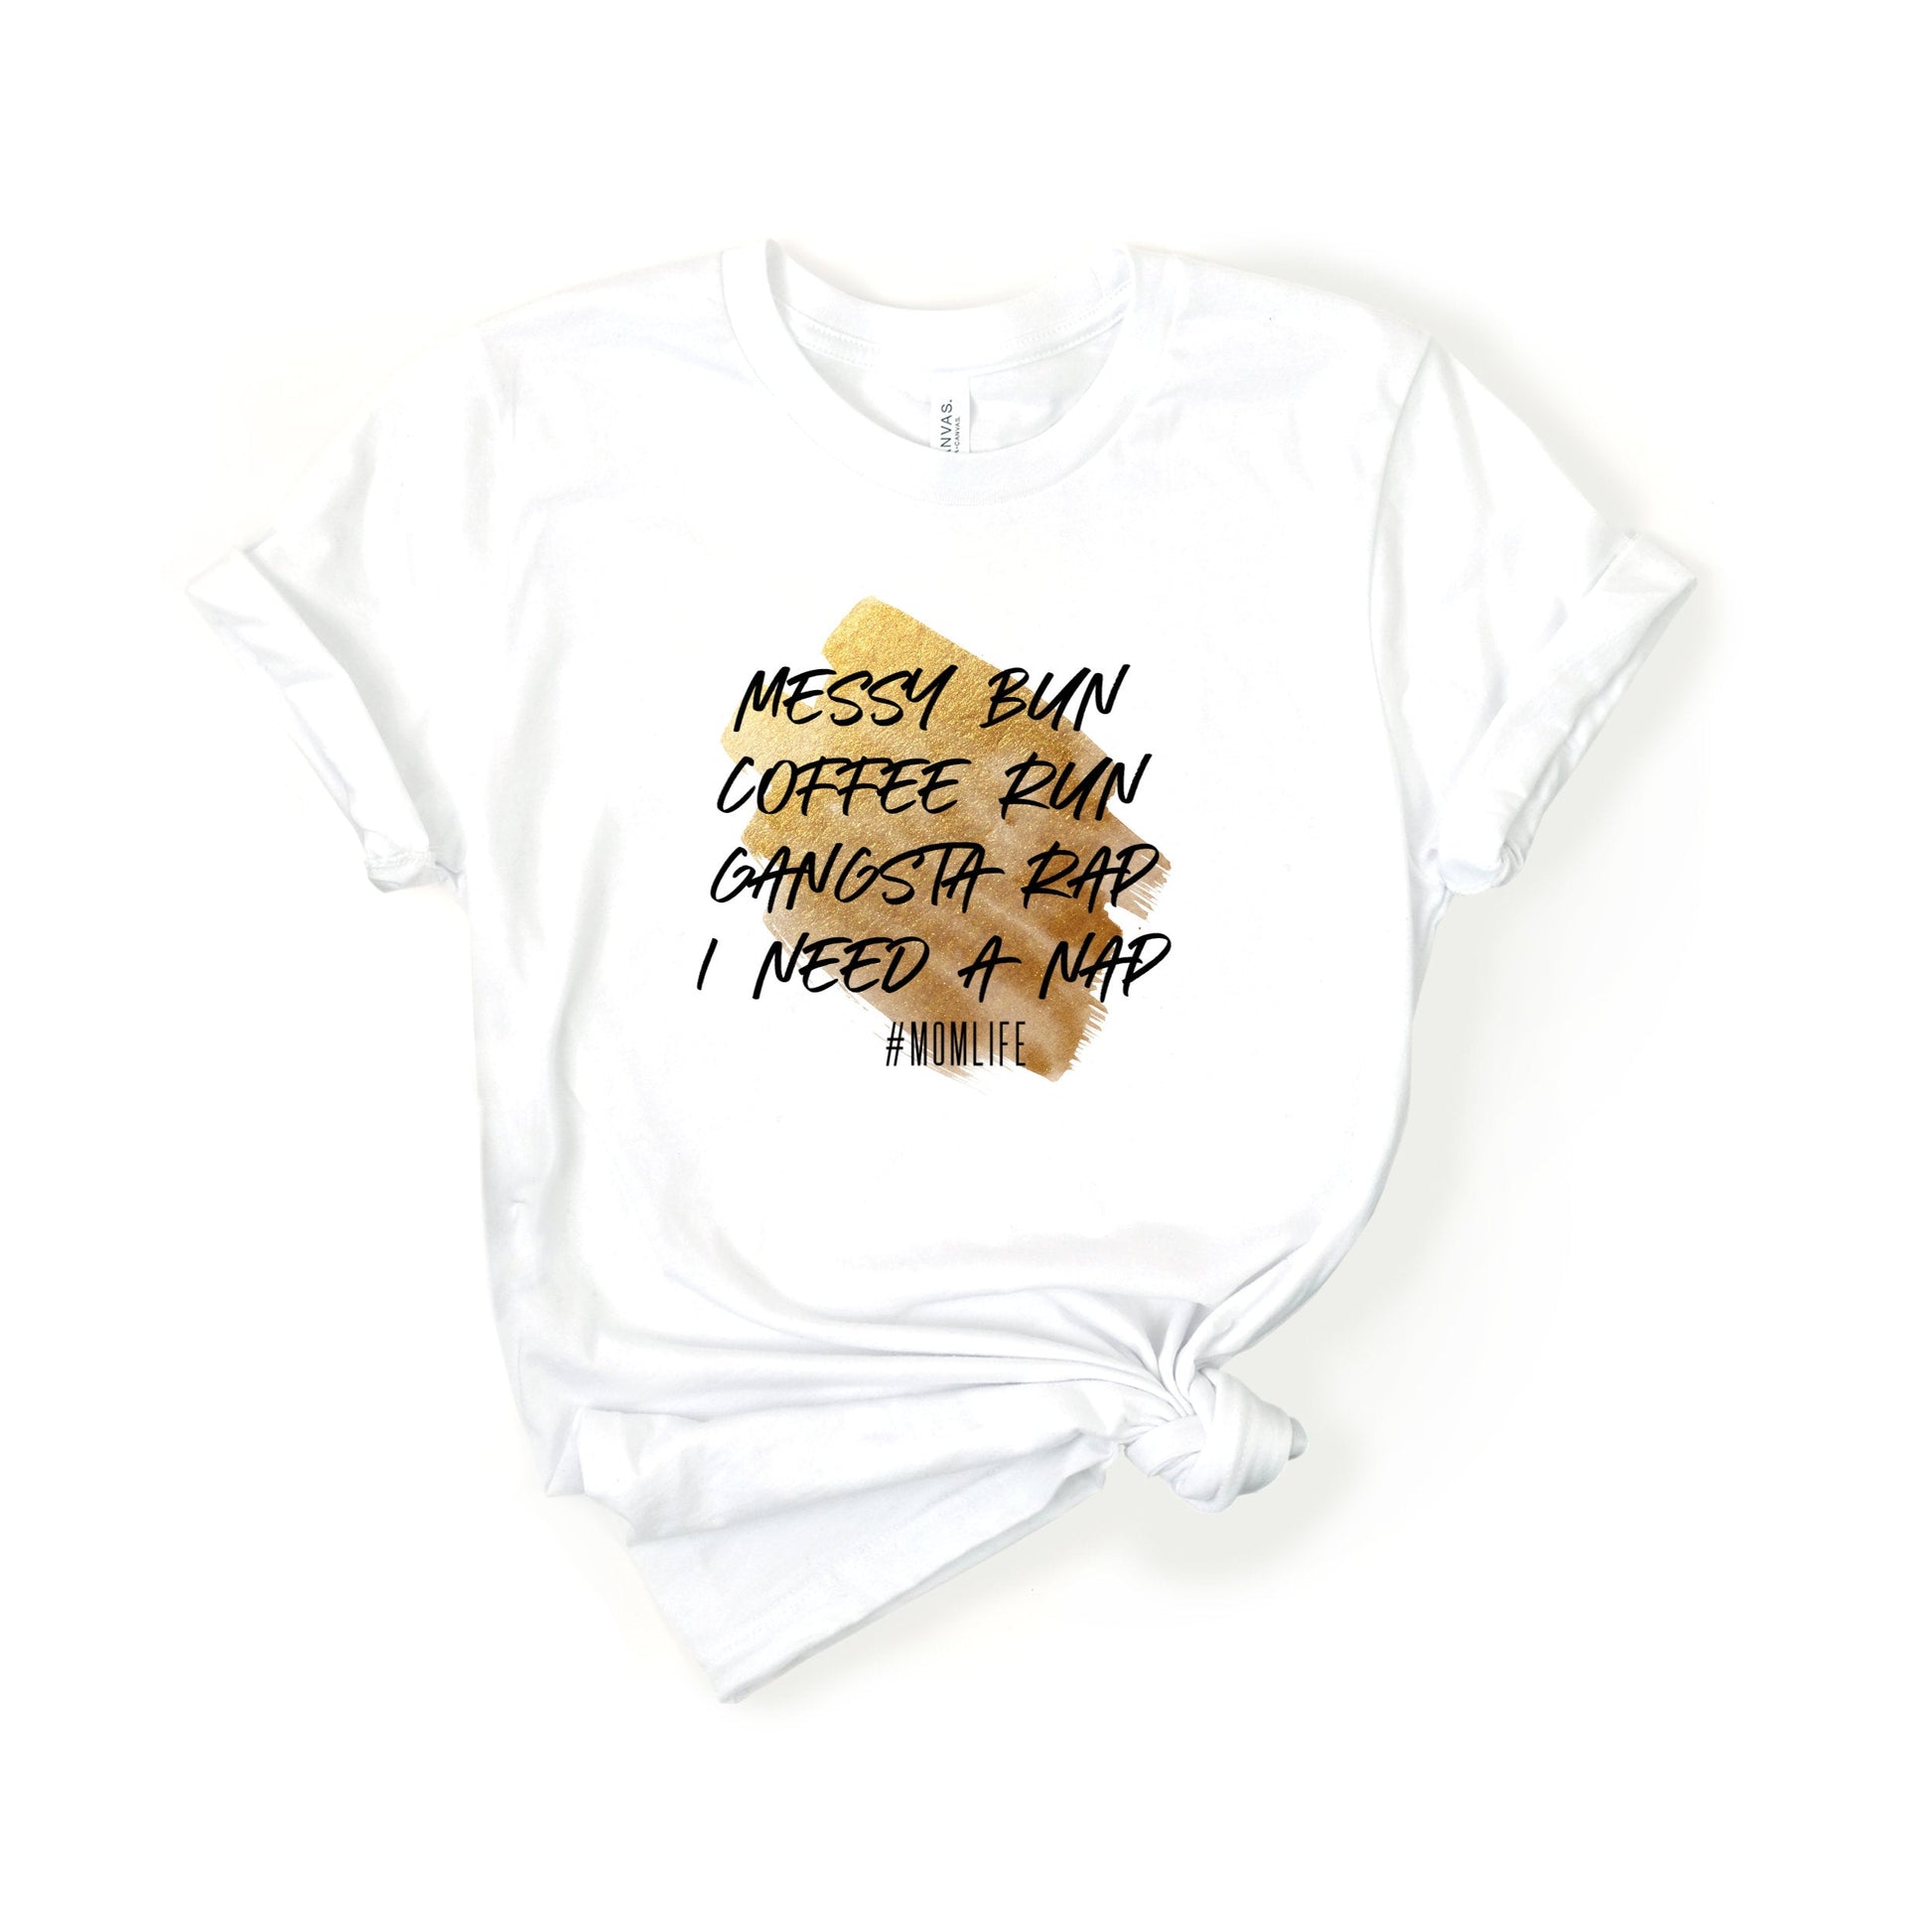 Gangsta Rap Mom Shirt, Messy Bun Mom Shirt, Mom Life Shirt, Coffee Run, Gift for Her, Mothers Day Gift, Shirt for Mom, New Mom Shirt - Premium Shirts - Just $21.50! Shop now at Nine Thirty Nine Design